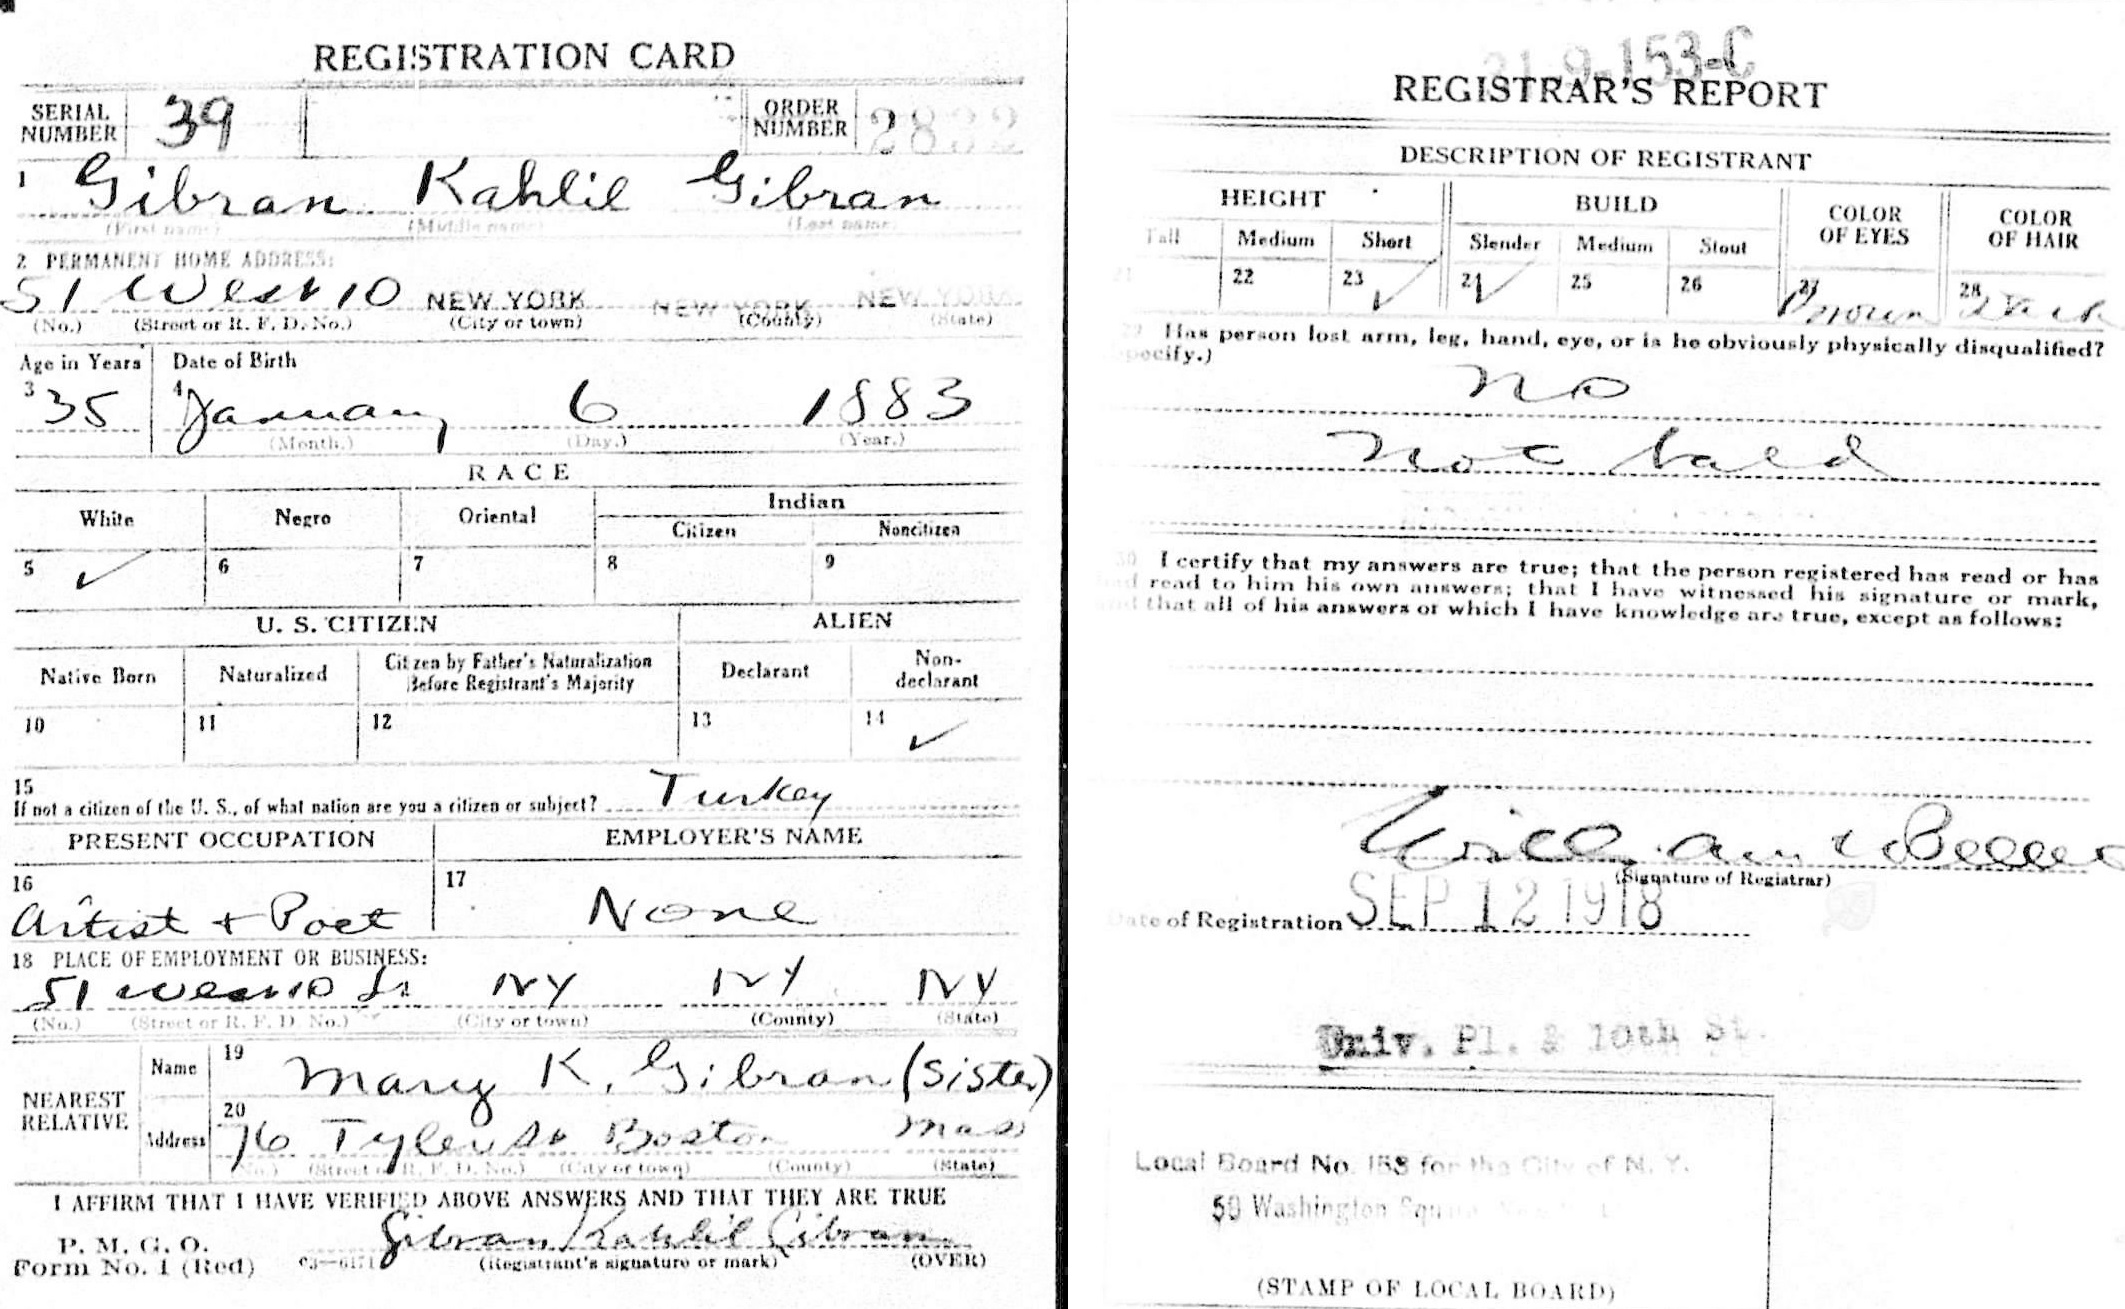 Gibran Kahlil Gibran: Registration Card (September 12, 1918)